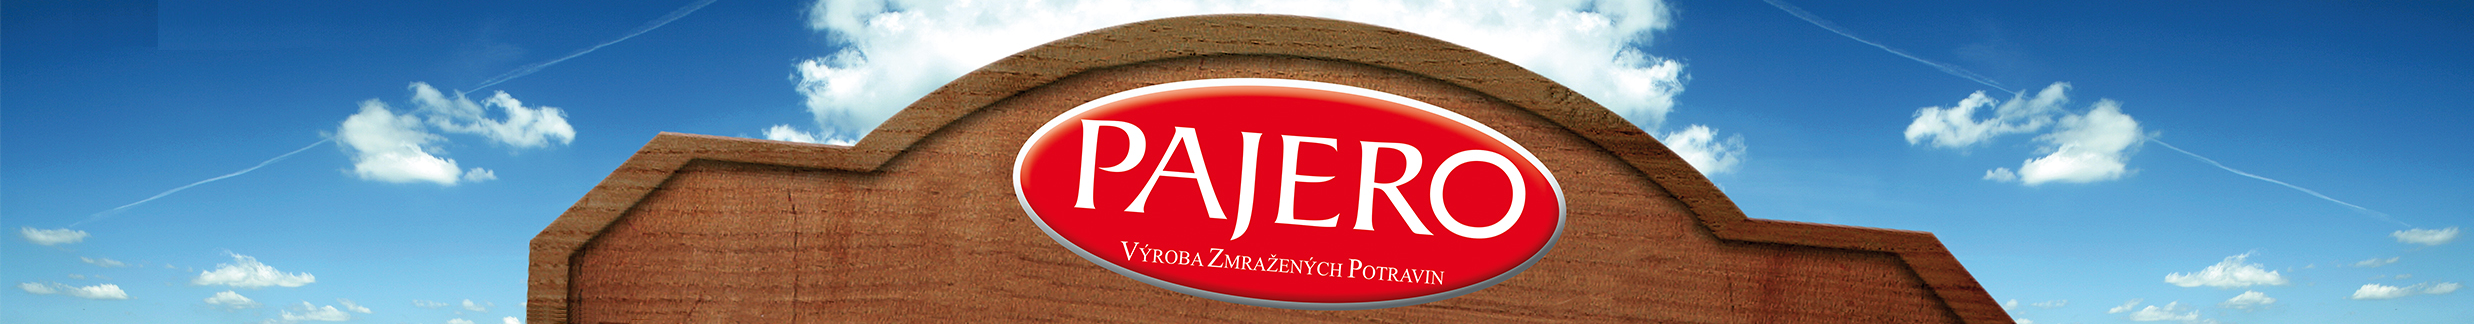 Logo Pajero